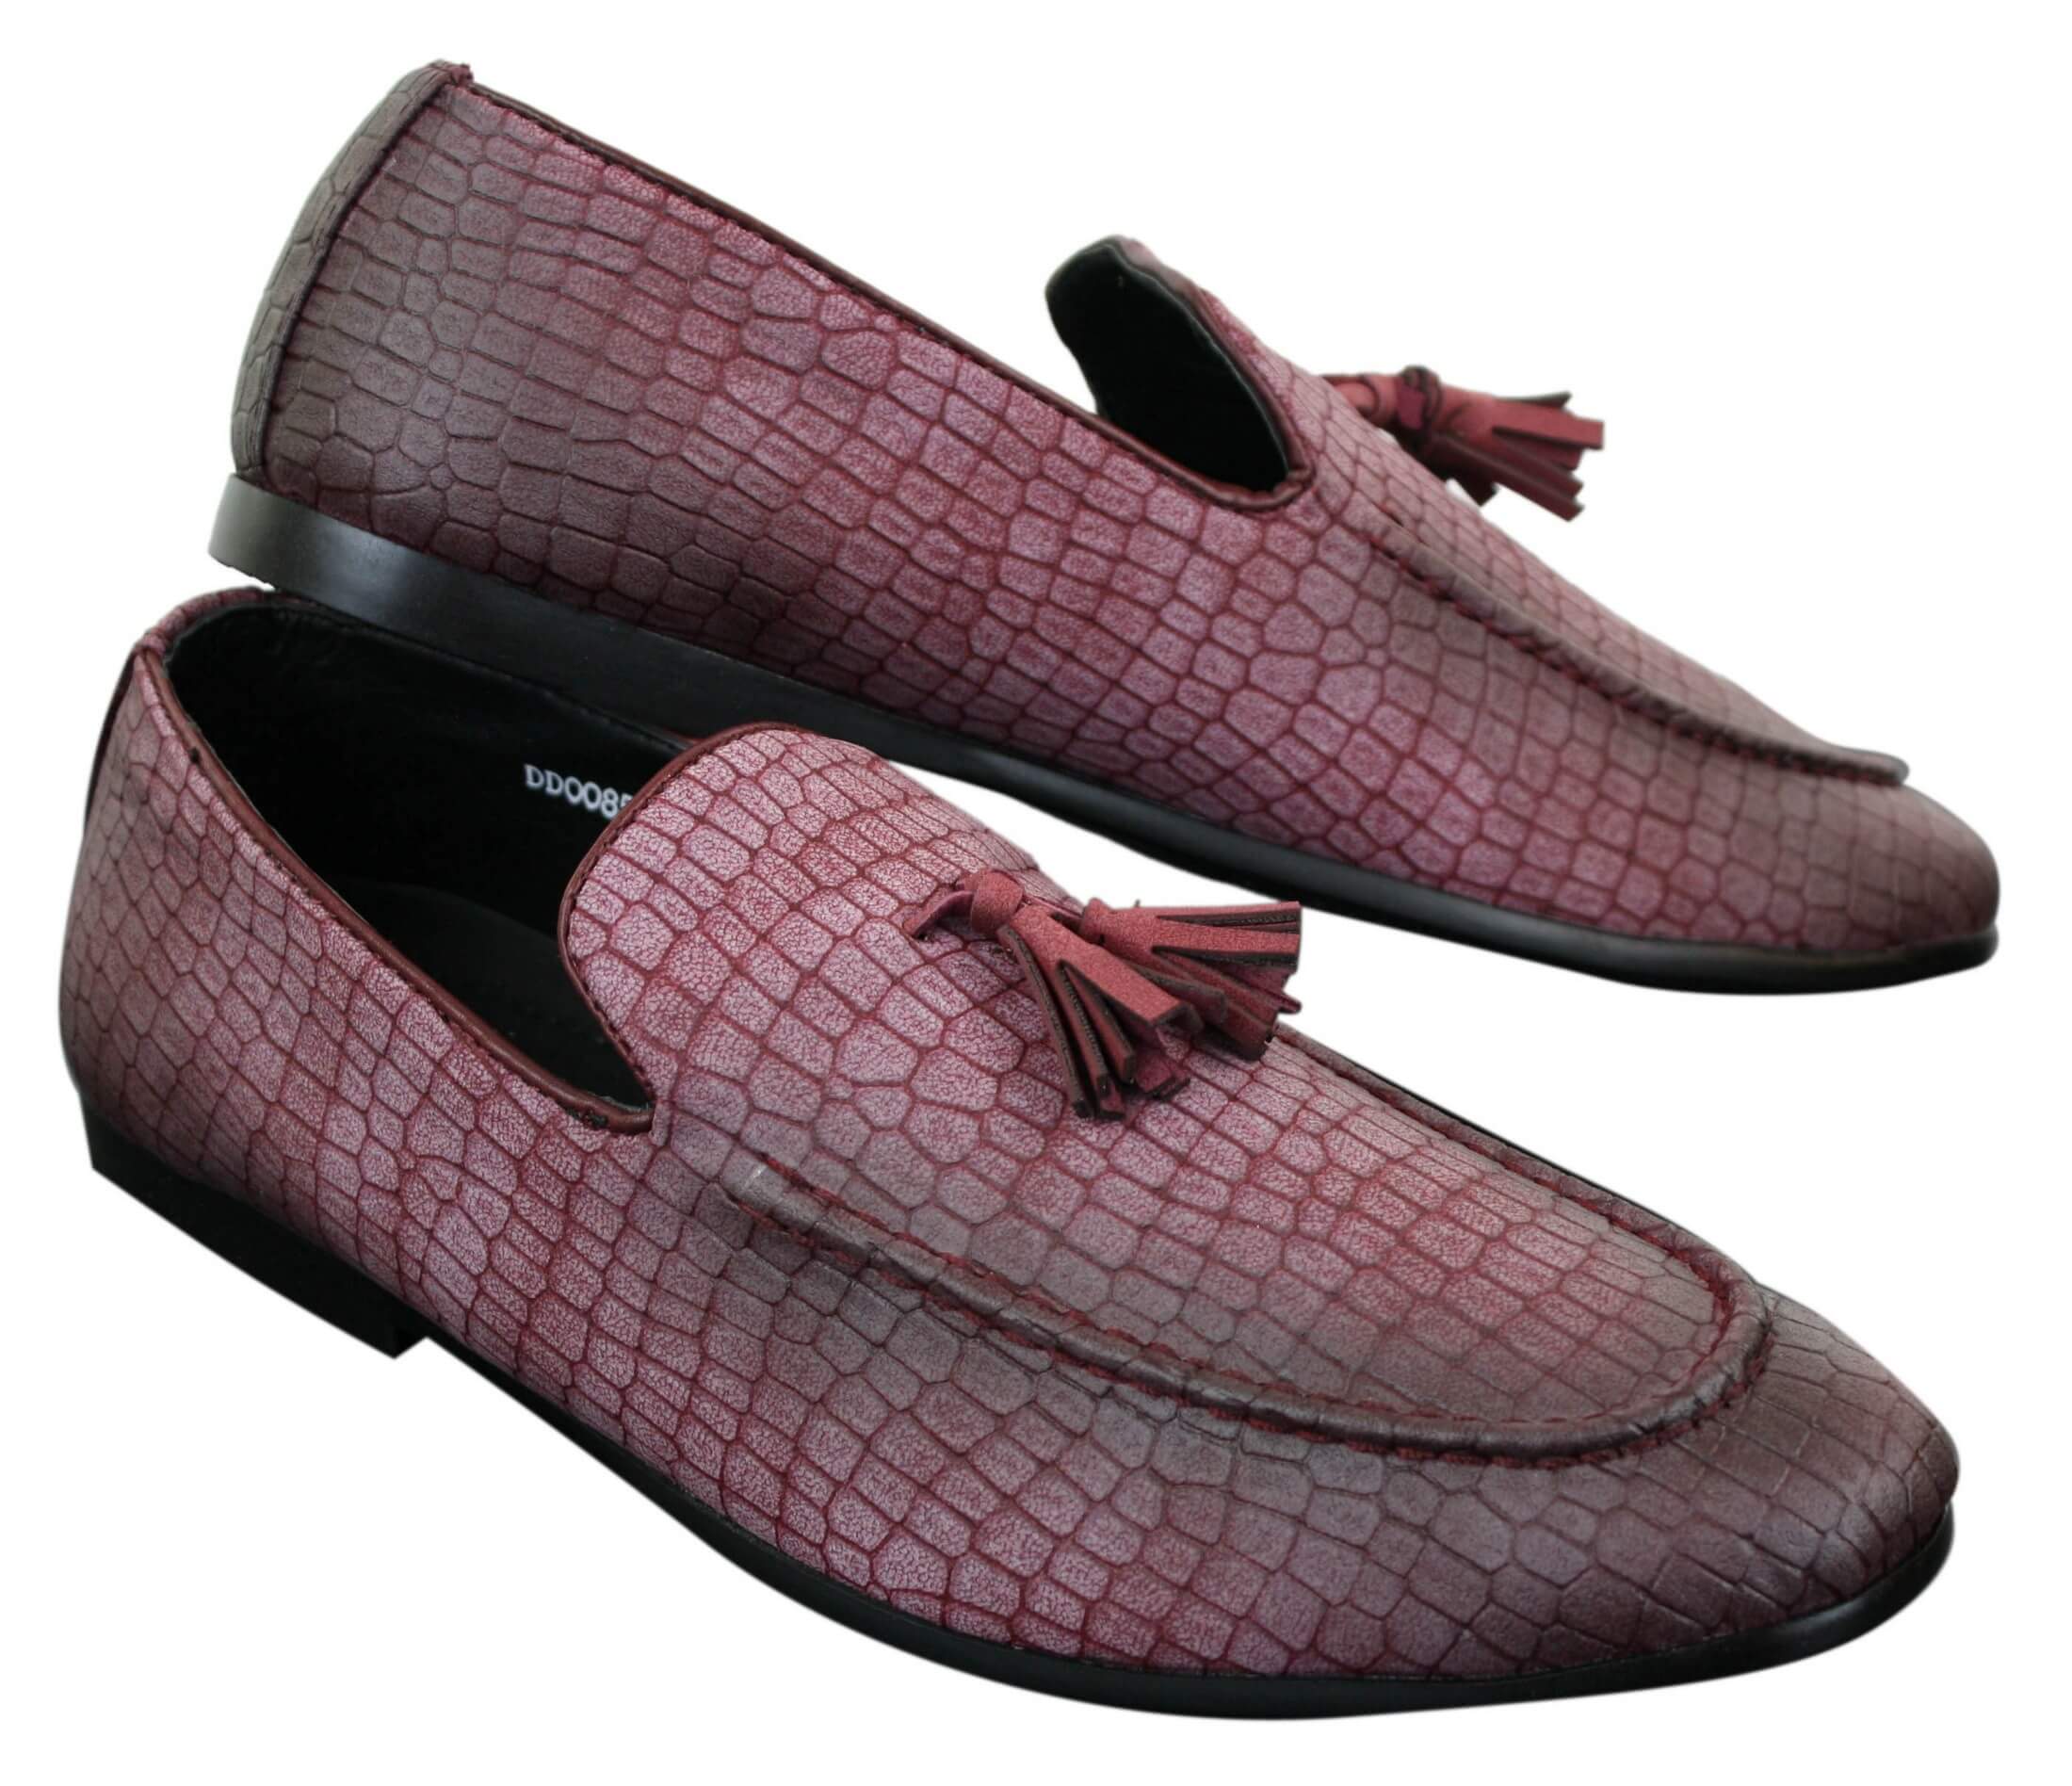 Elong Mens Snake Crocodile Leather PU Loafers Driving Shoes Slip On Tassel Comfort Vintage red